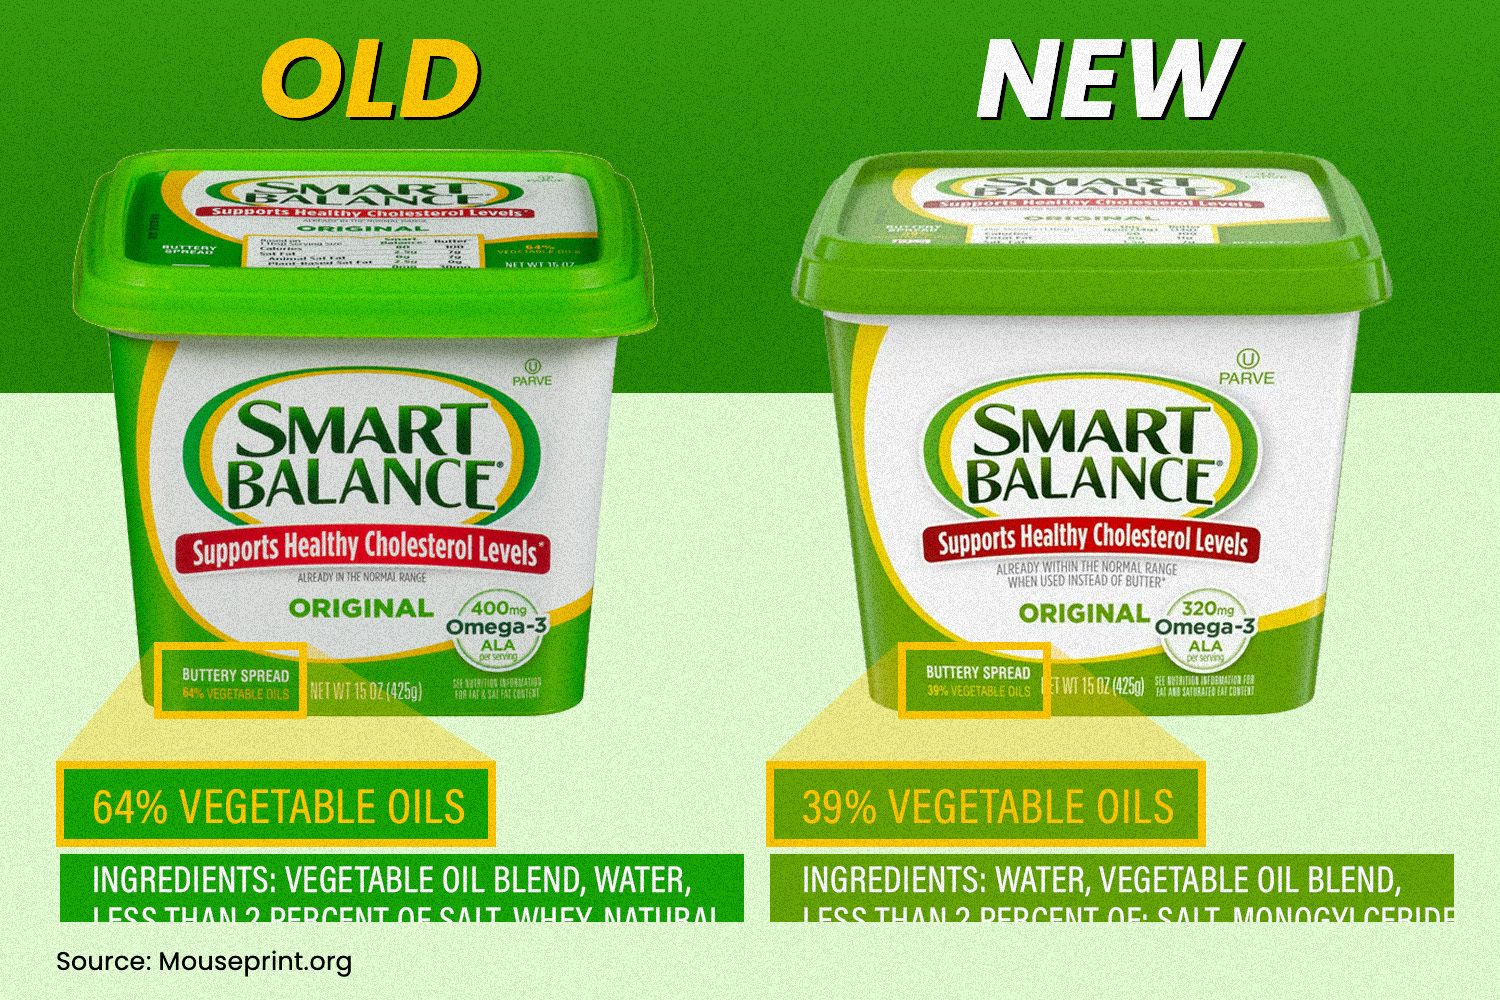 Smart Balance Announces Dairy Free Butter, 2015-04-02